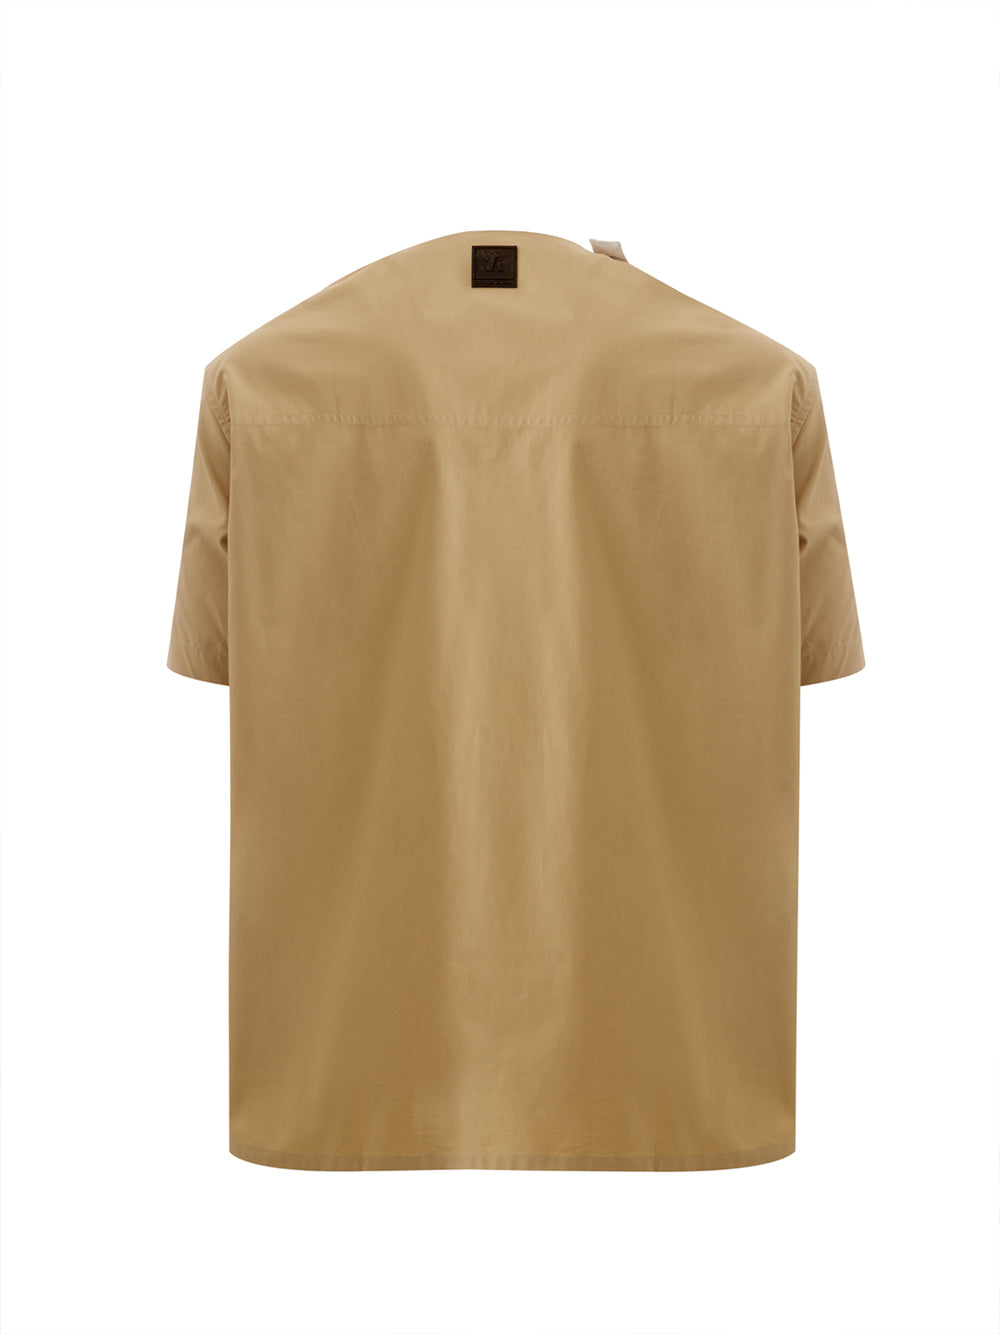 Emporio Armani Overcoat Shirt